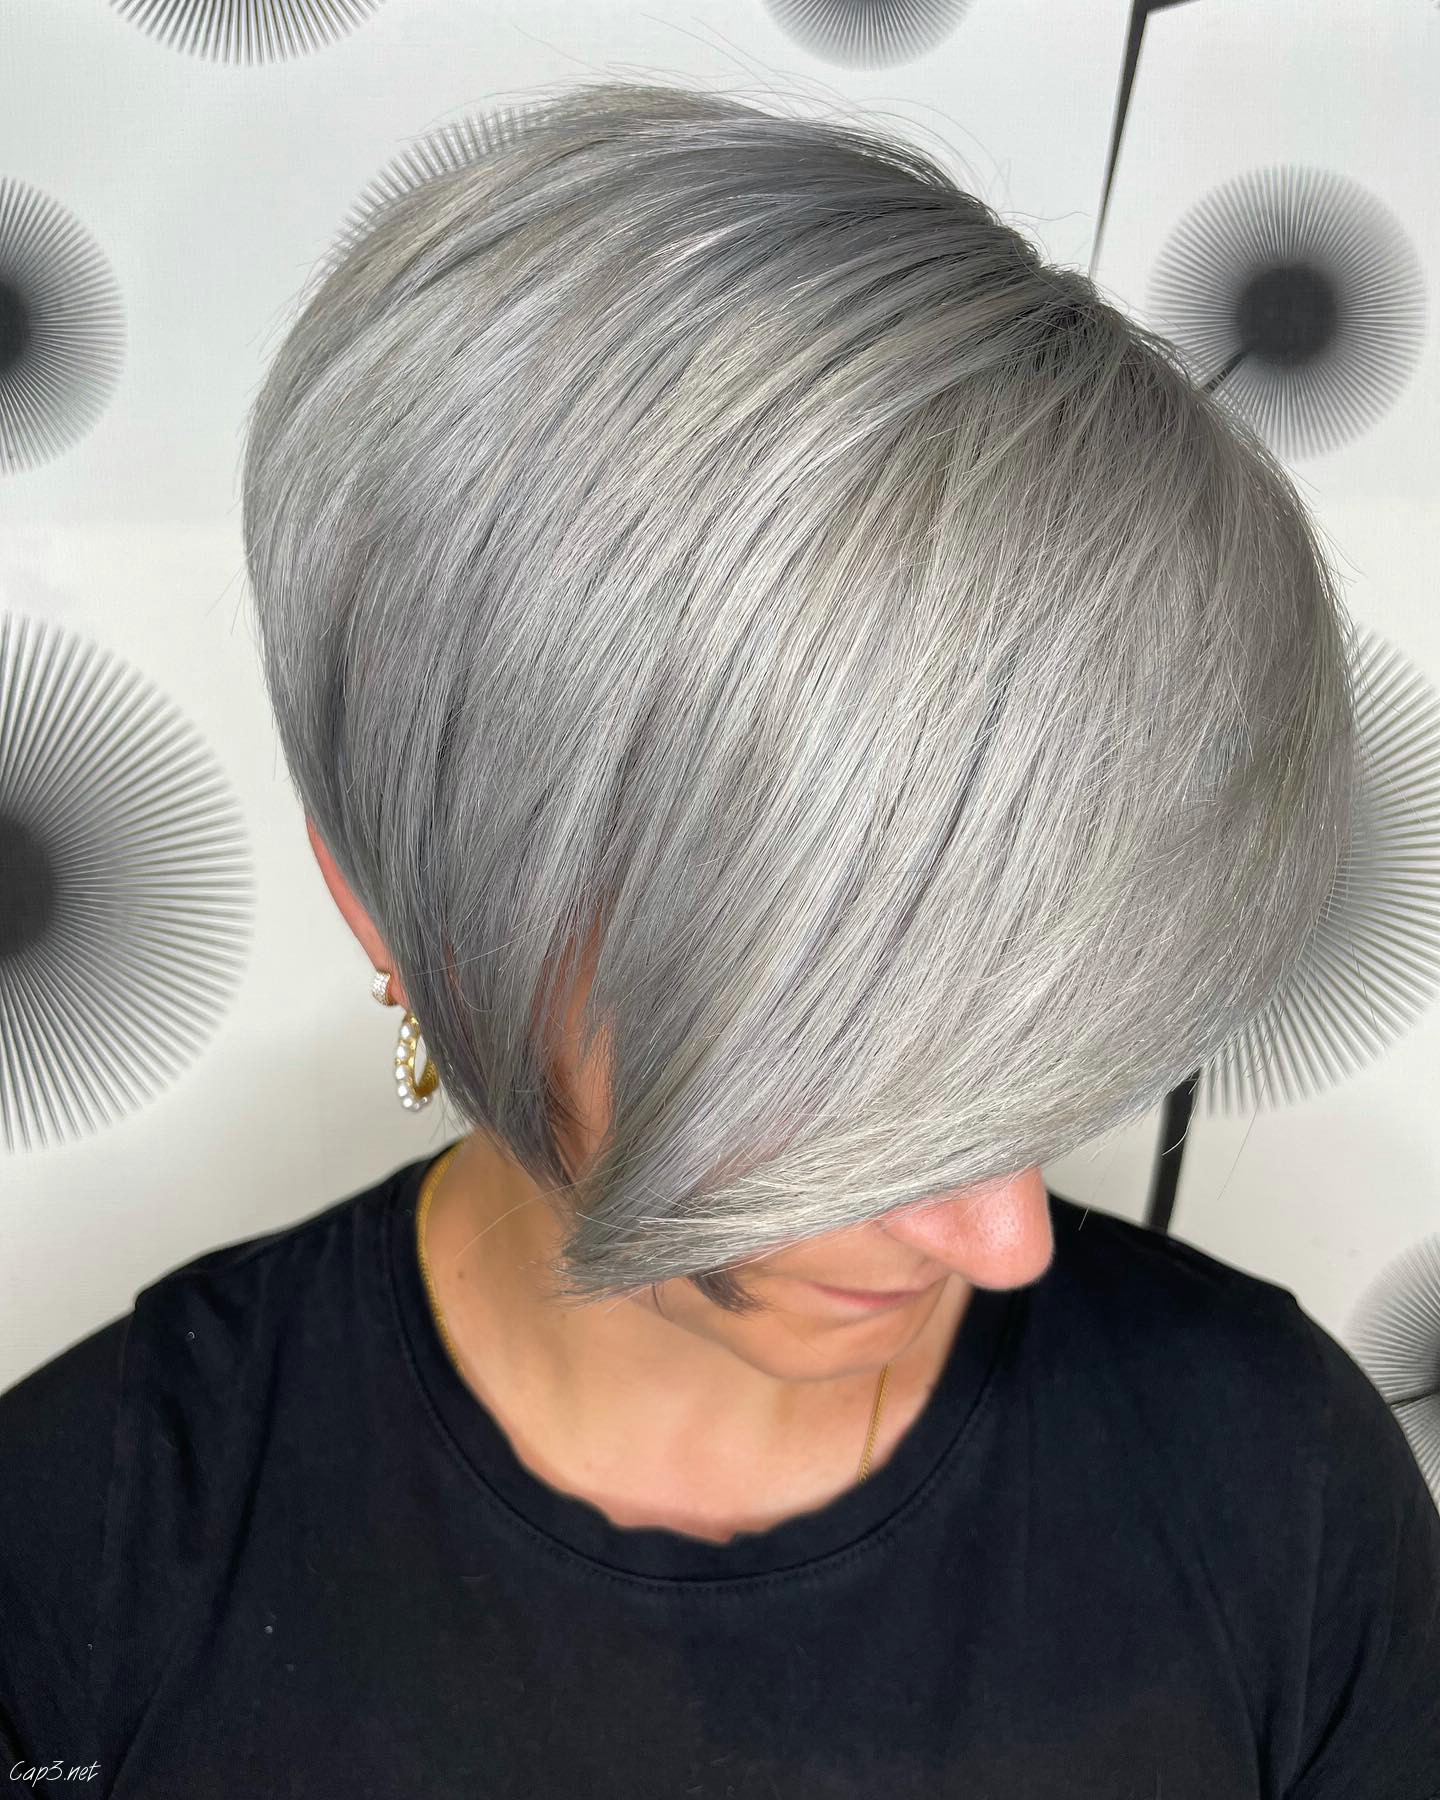 Long Silver Haircut With Bangs